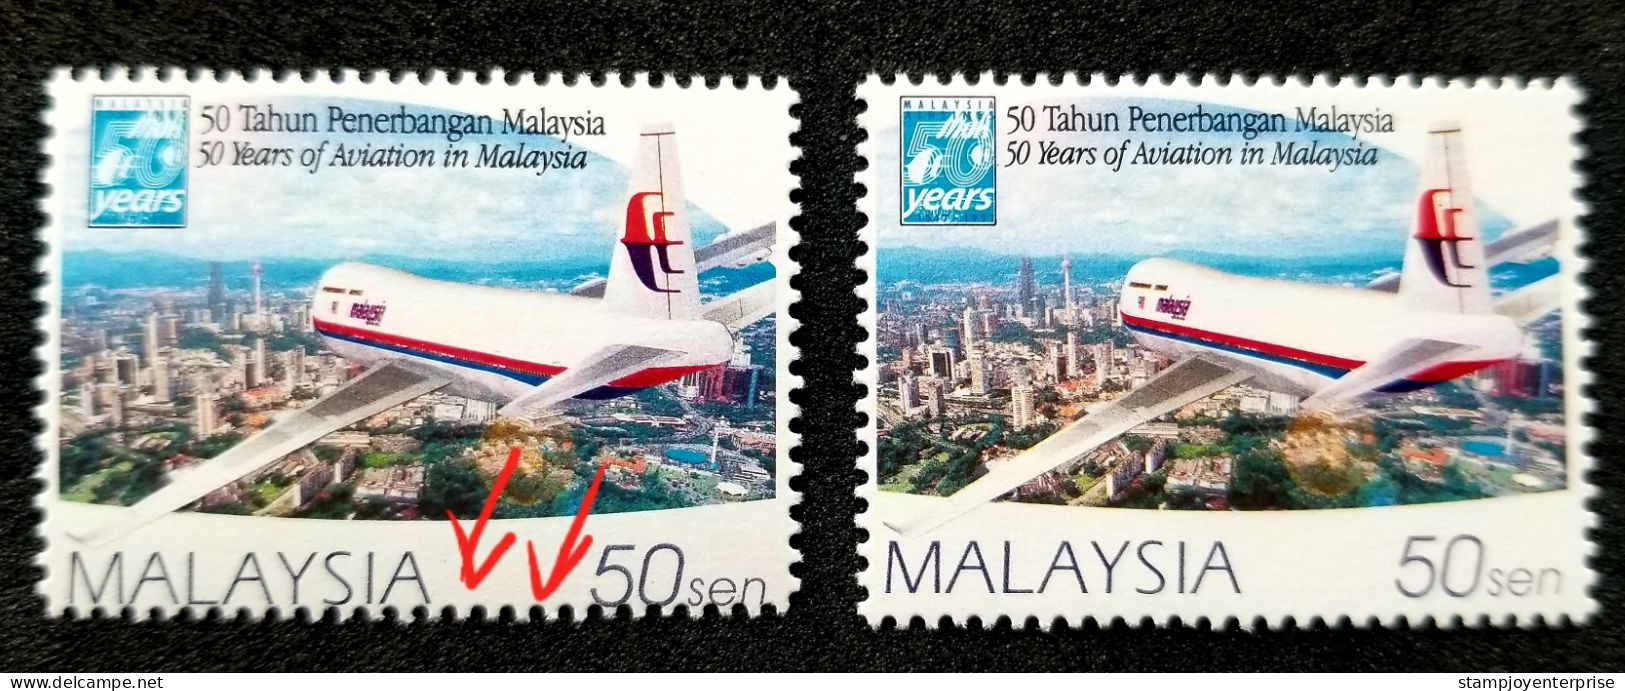 Malaysia 50 Years Aviation 1997 Airplane Transport Vehicle (stamp) MNH *Perf Shift *Error *Rare - Malesia (1964-...)